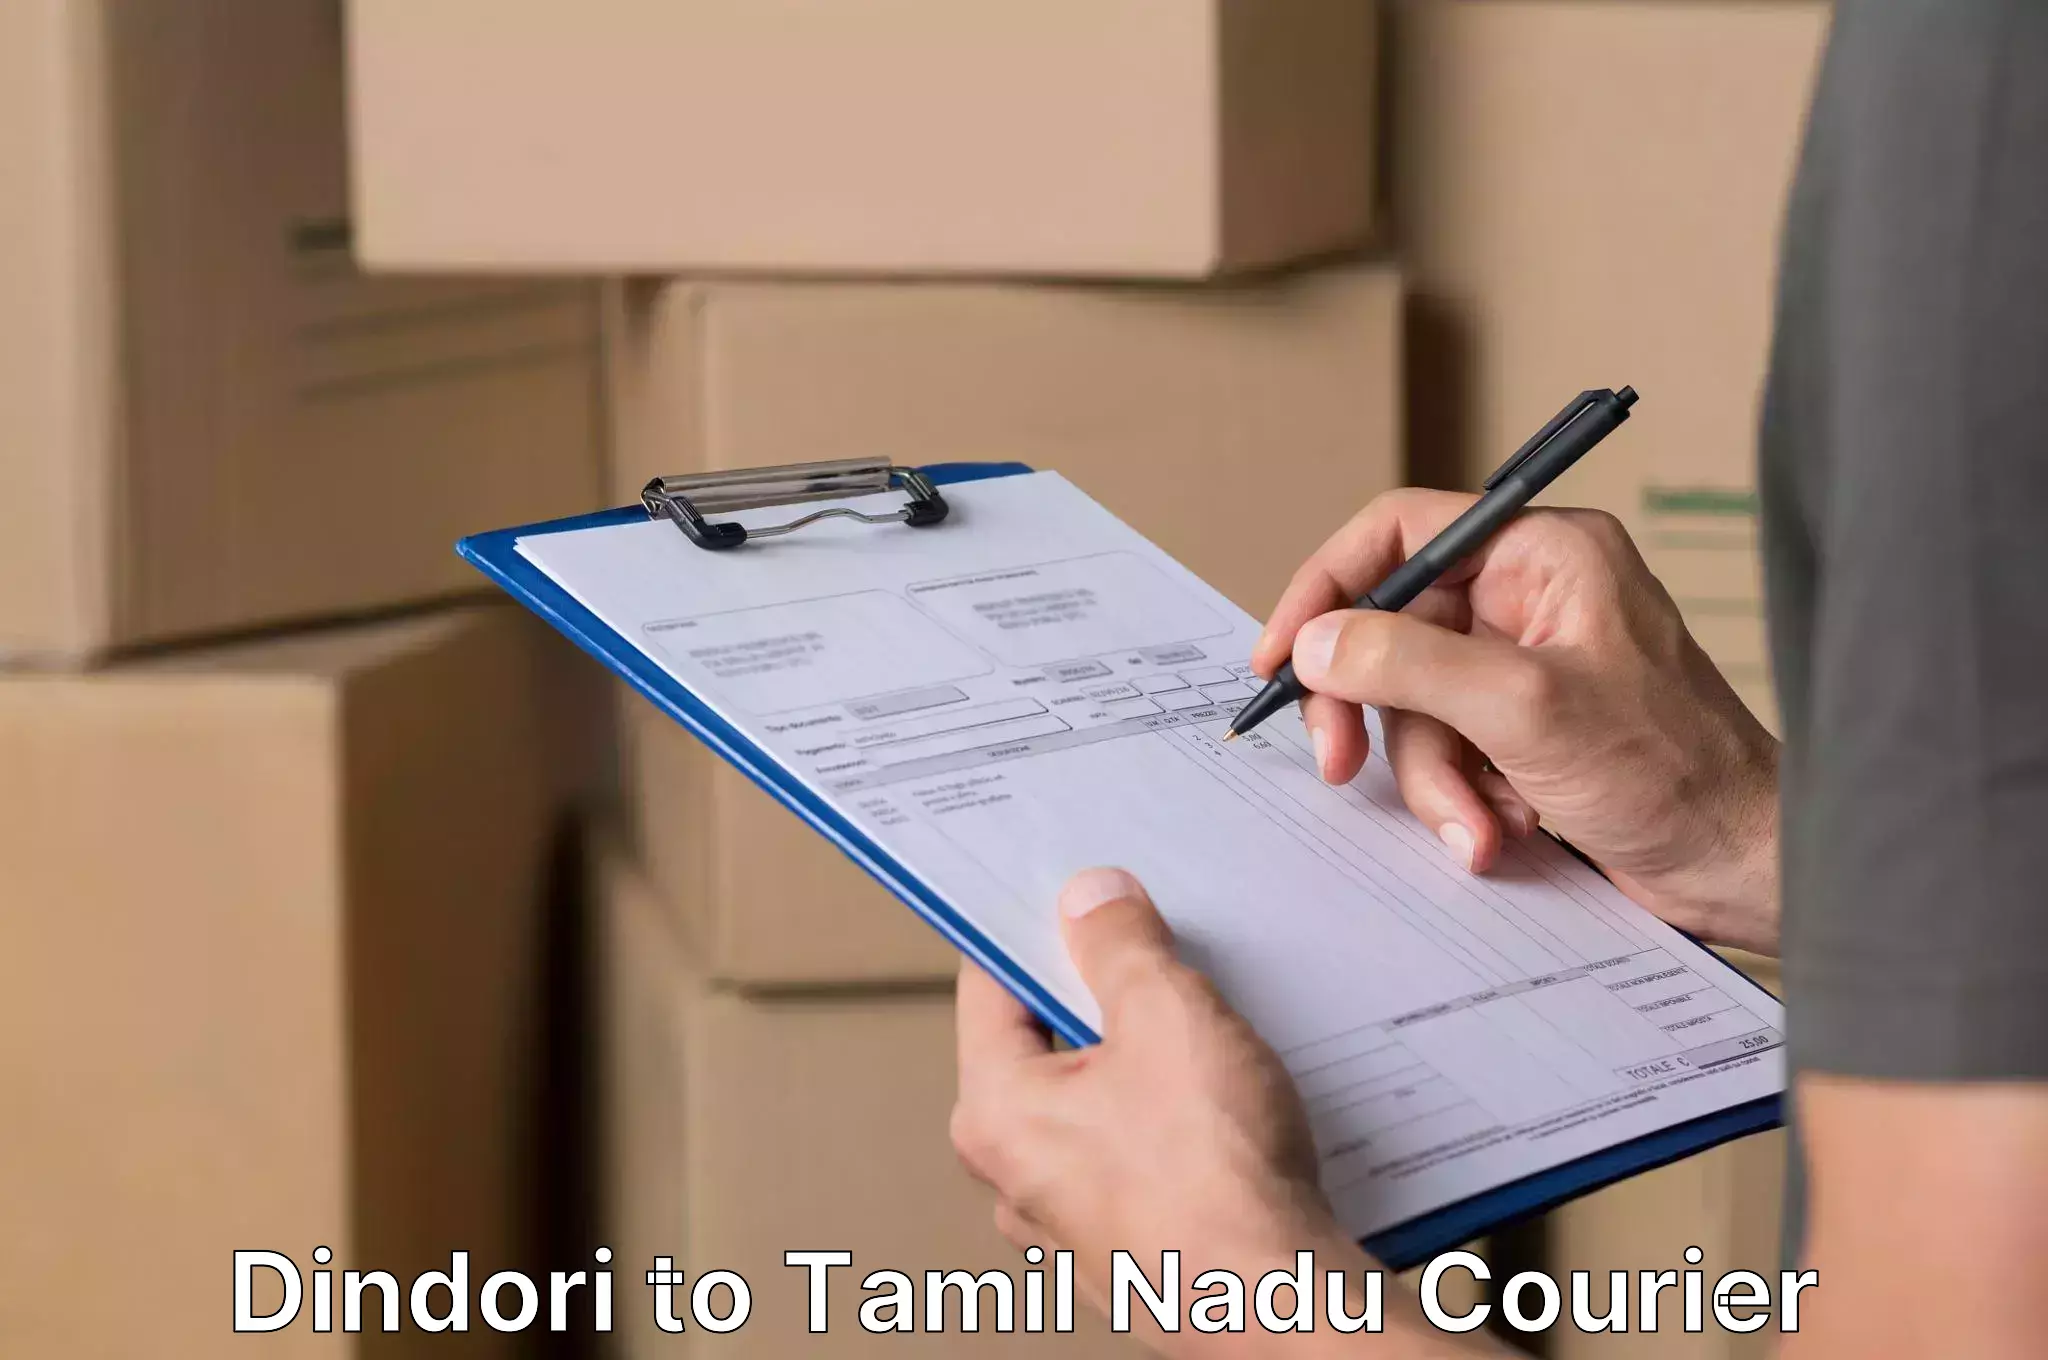 Hassle-free relocation Dindori to IIT Madras